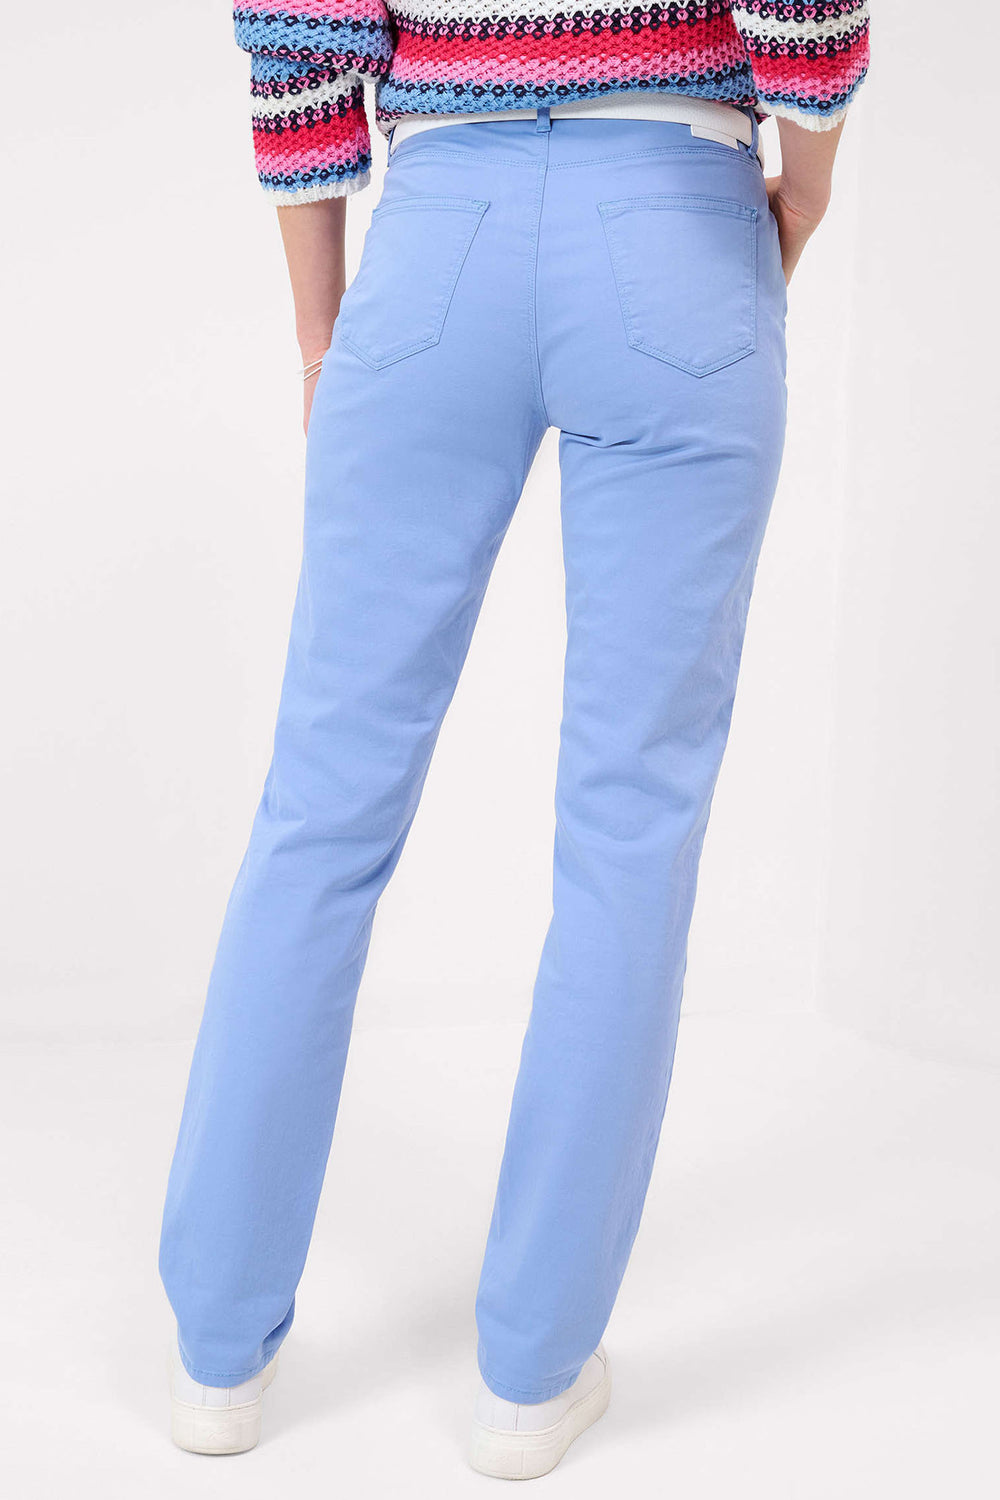 Brax Carola 71-1458 09859520 28 Santorin Blue Five Pocket Jeans - Shirley Allum Boutique